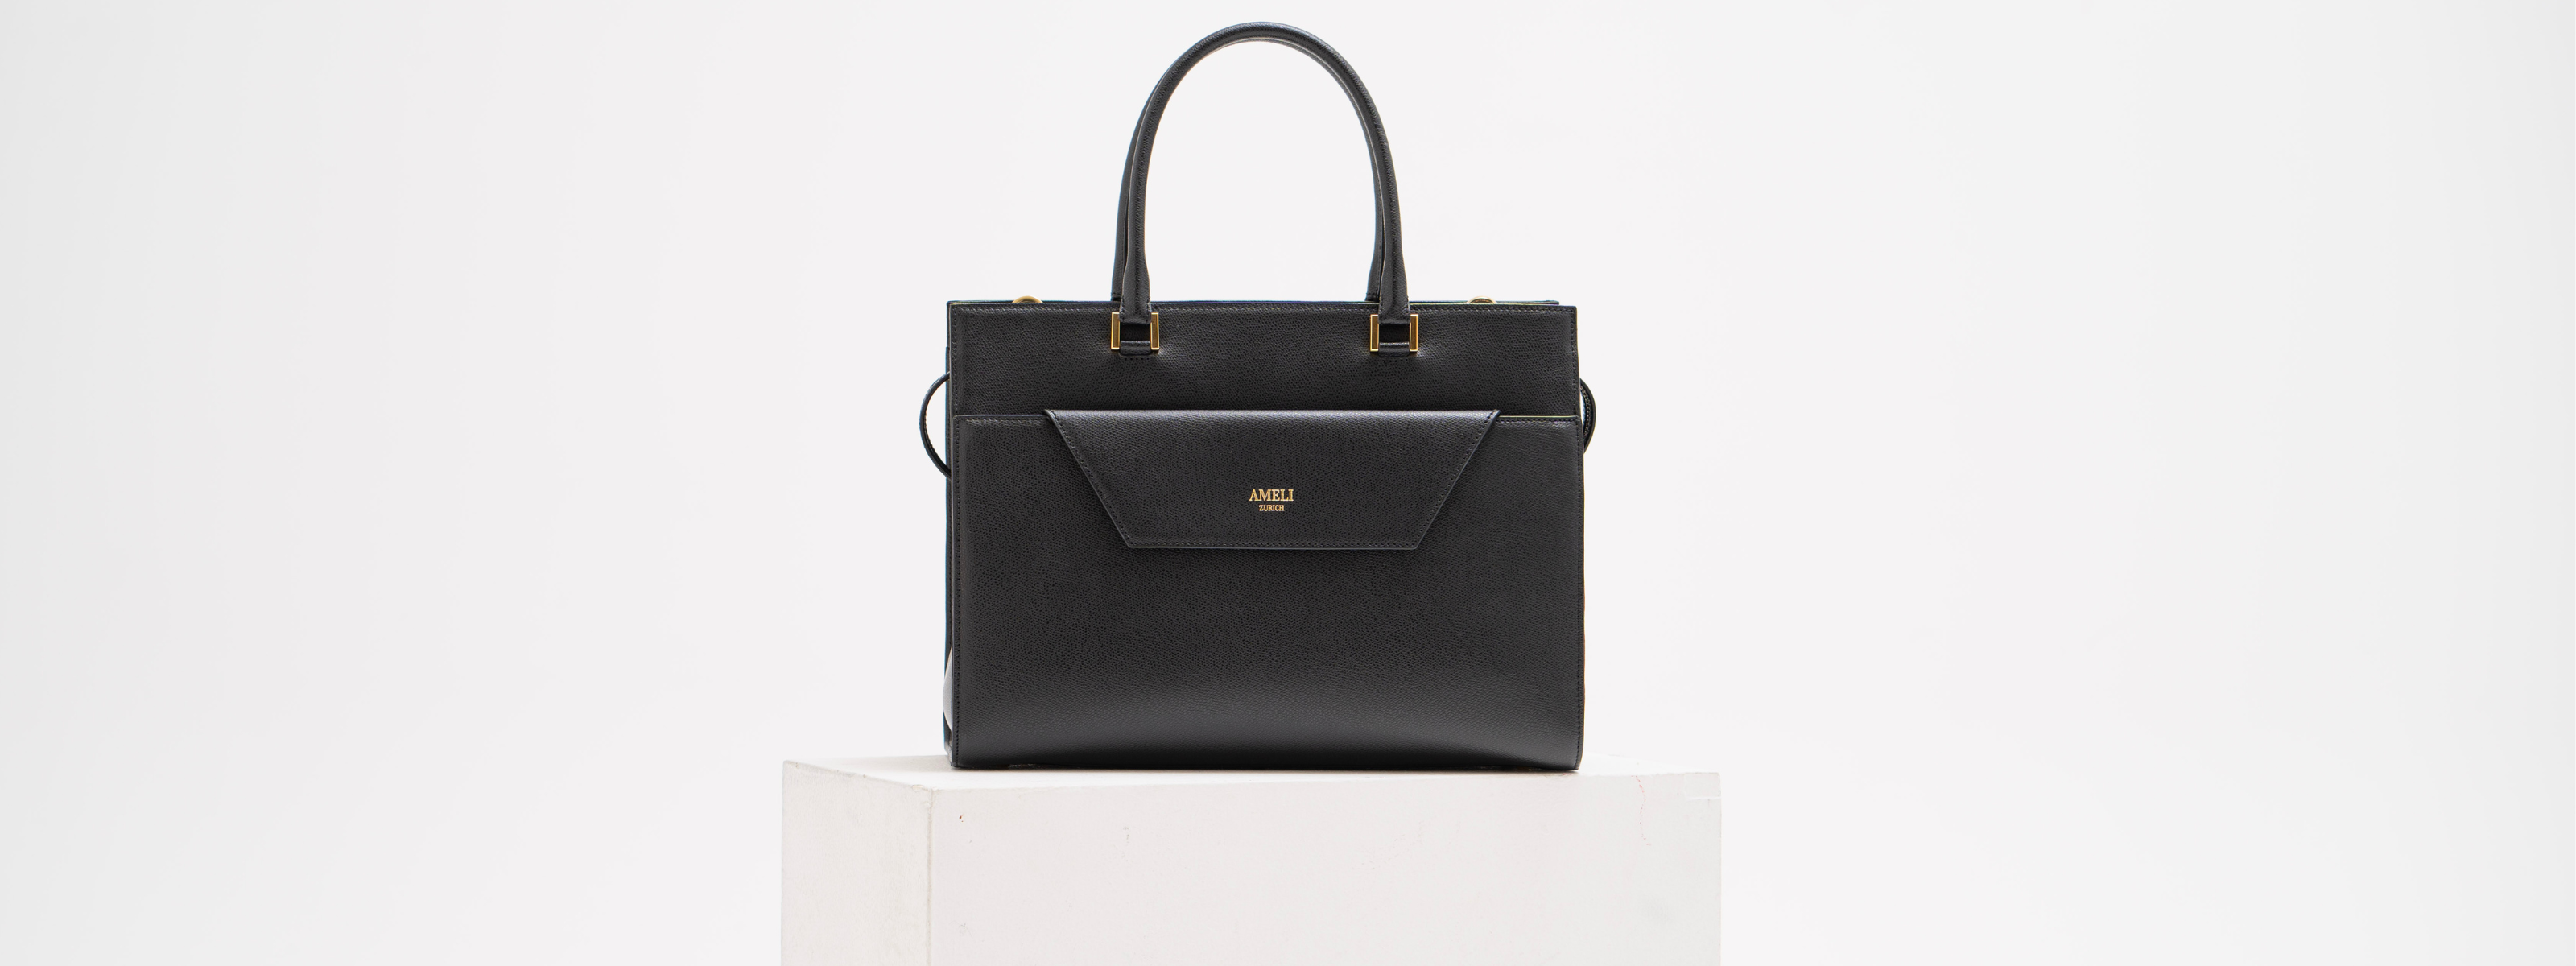 Handbags For Business Women